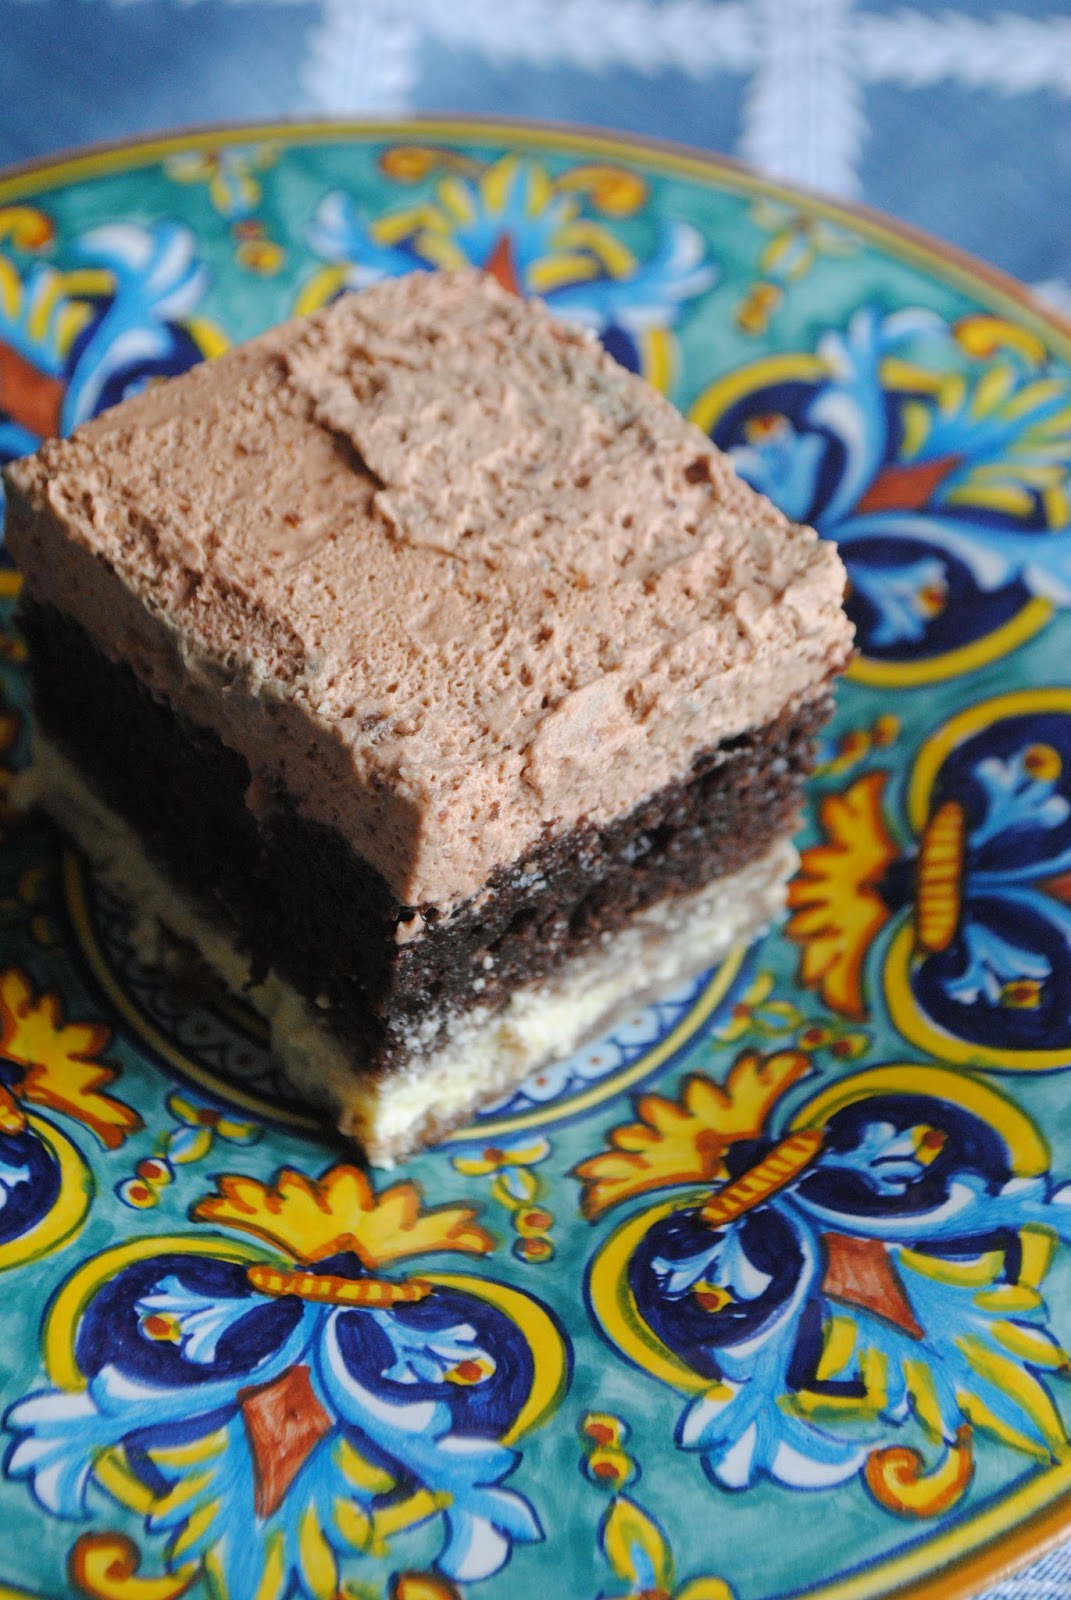 Lori's Lipsmacking Goodness: Chocolate Italian Love Cake